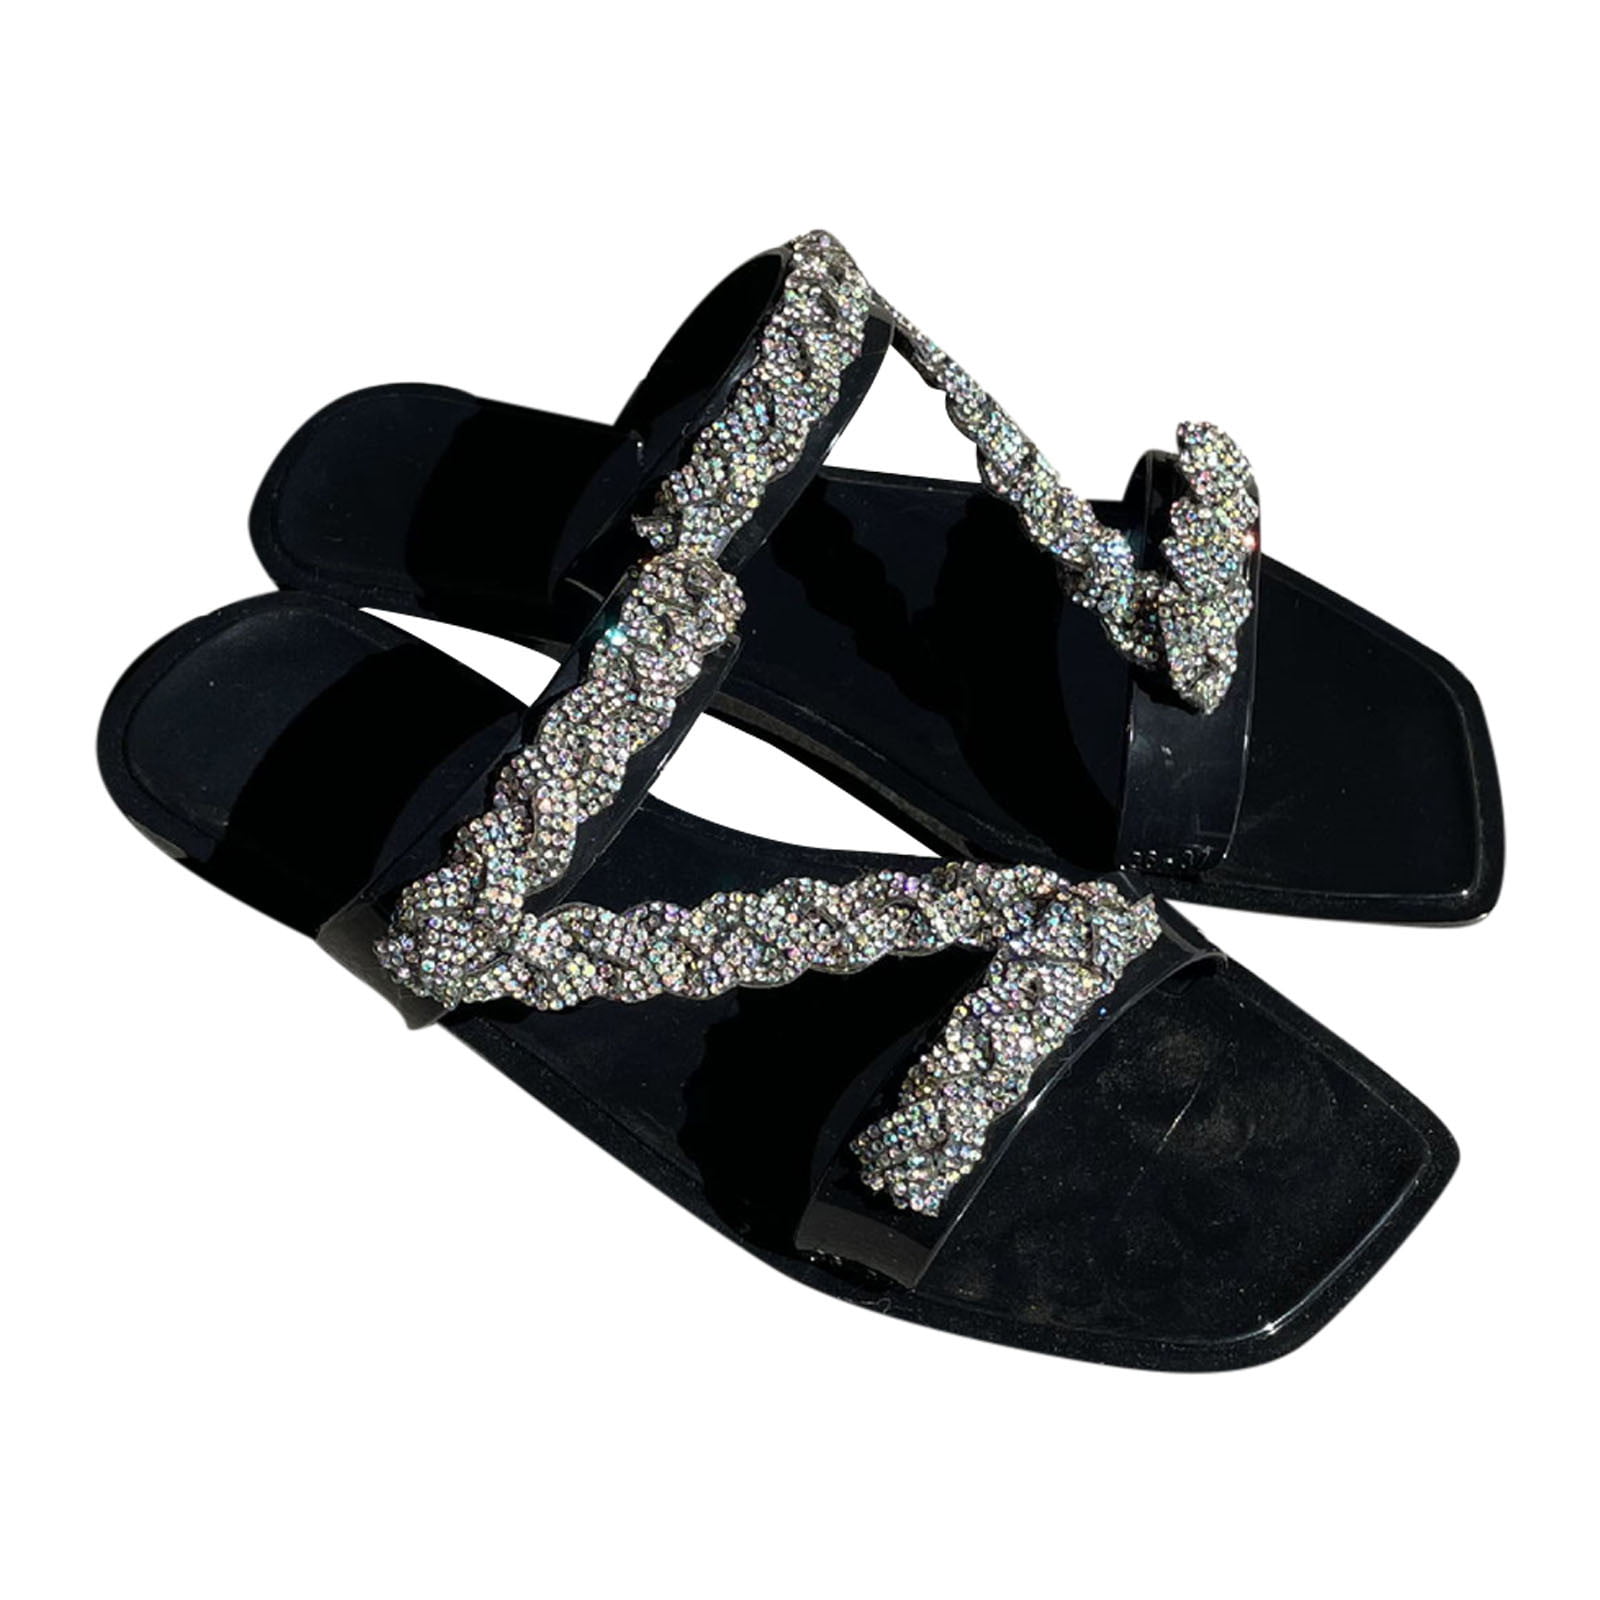 UK Women Open Toe Rhinestone Jelly Clear Comfy Sandals Casual Flat Shoes Slipper 